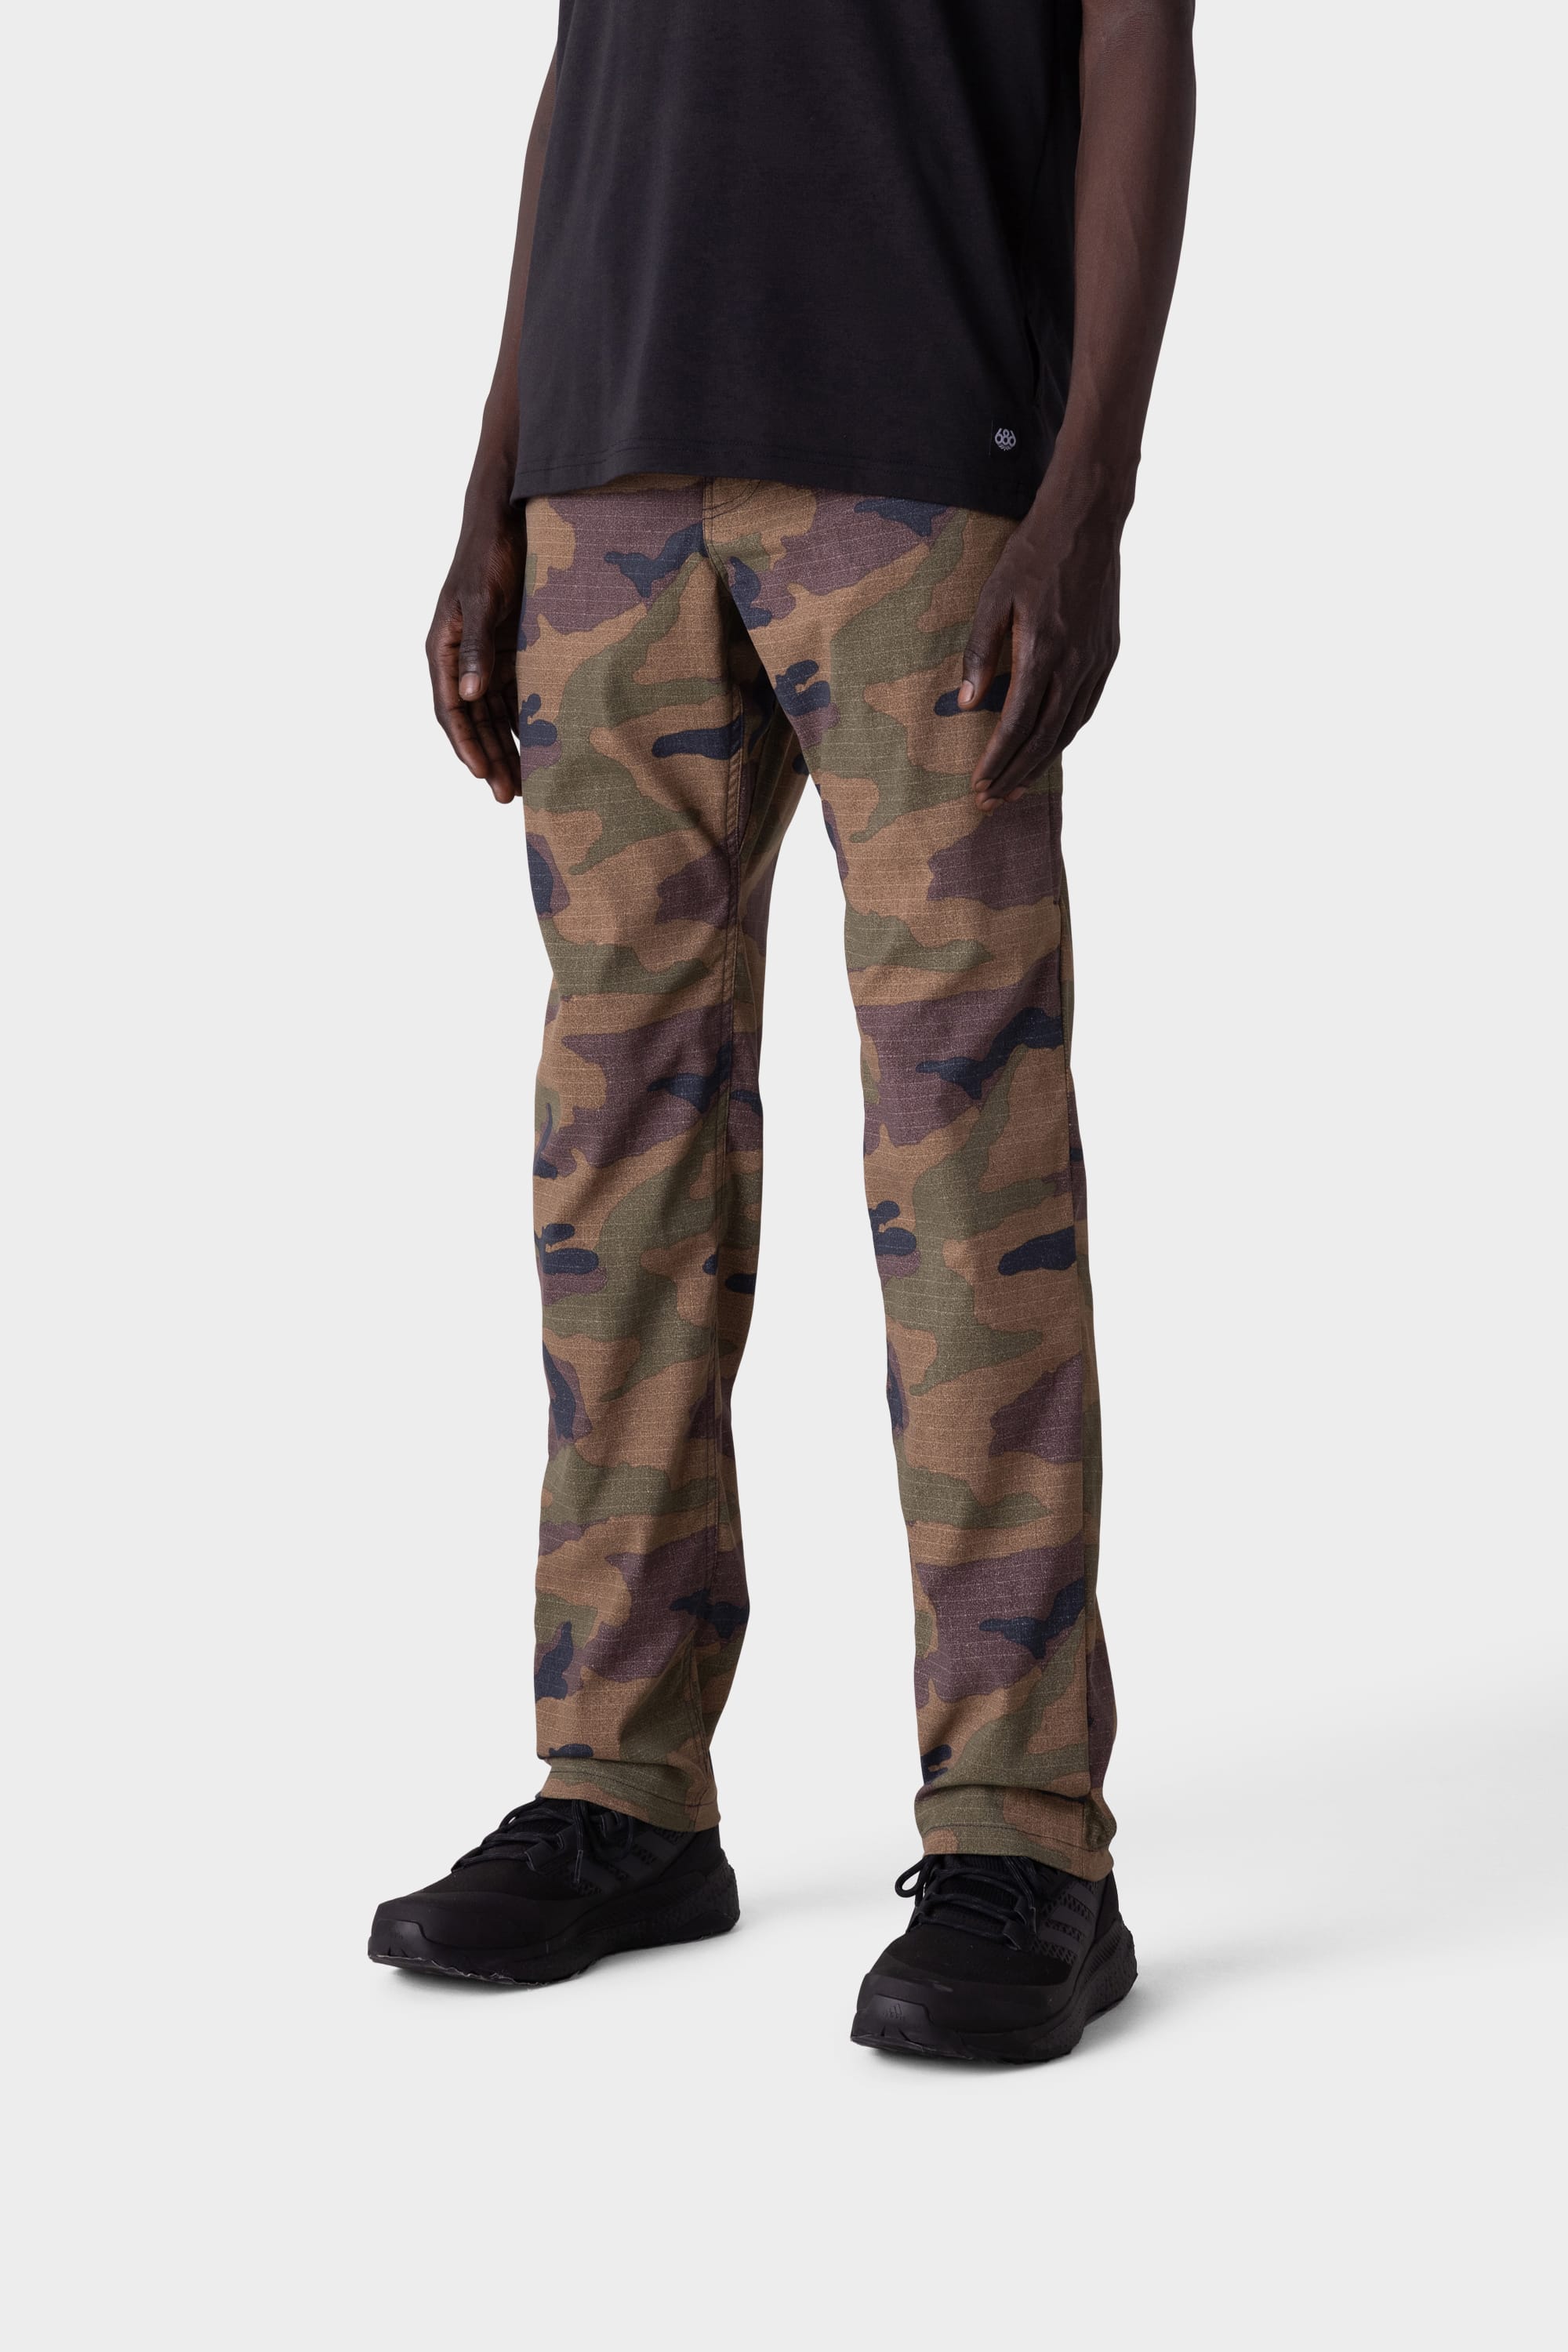 Mens Cargo Camo Pants Multi Pocket Lightweight Army Regular Fit Camo Green  32x32